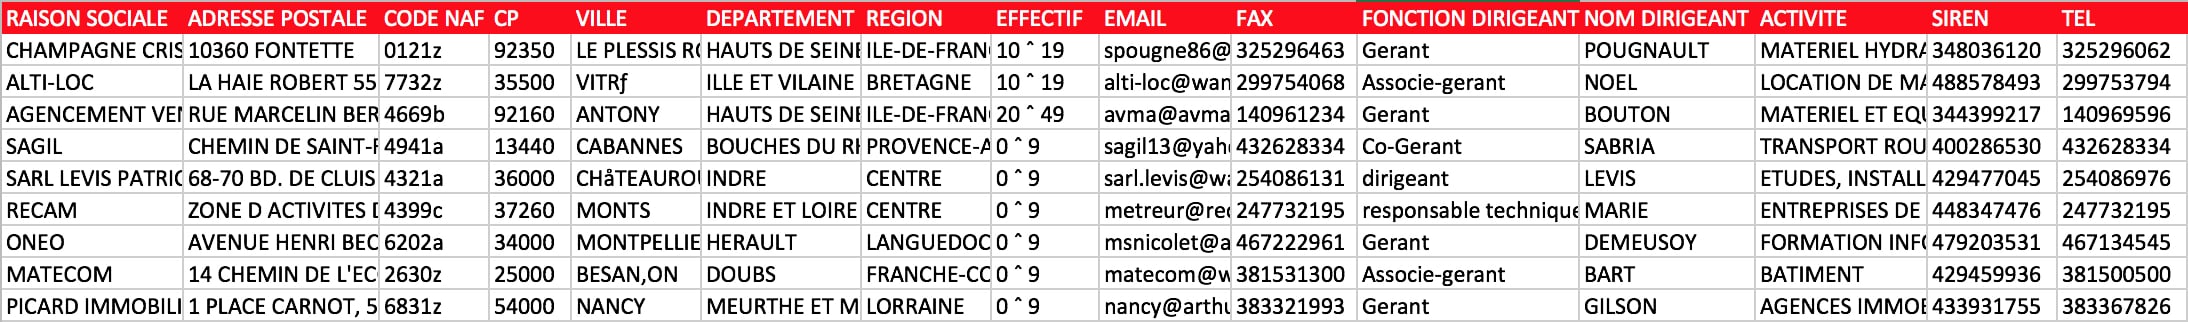 Extrait base email fichierentreprise.fr